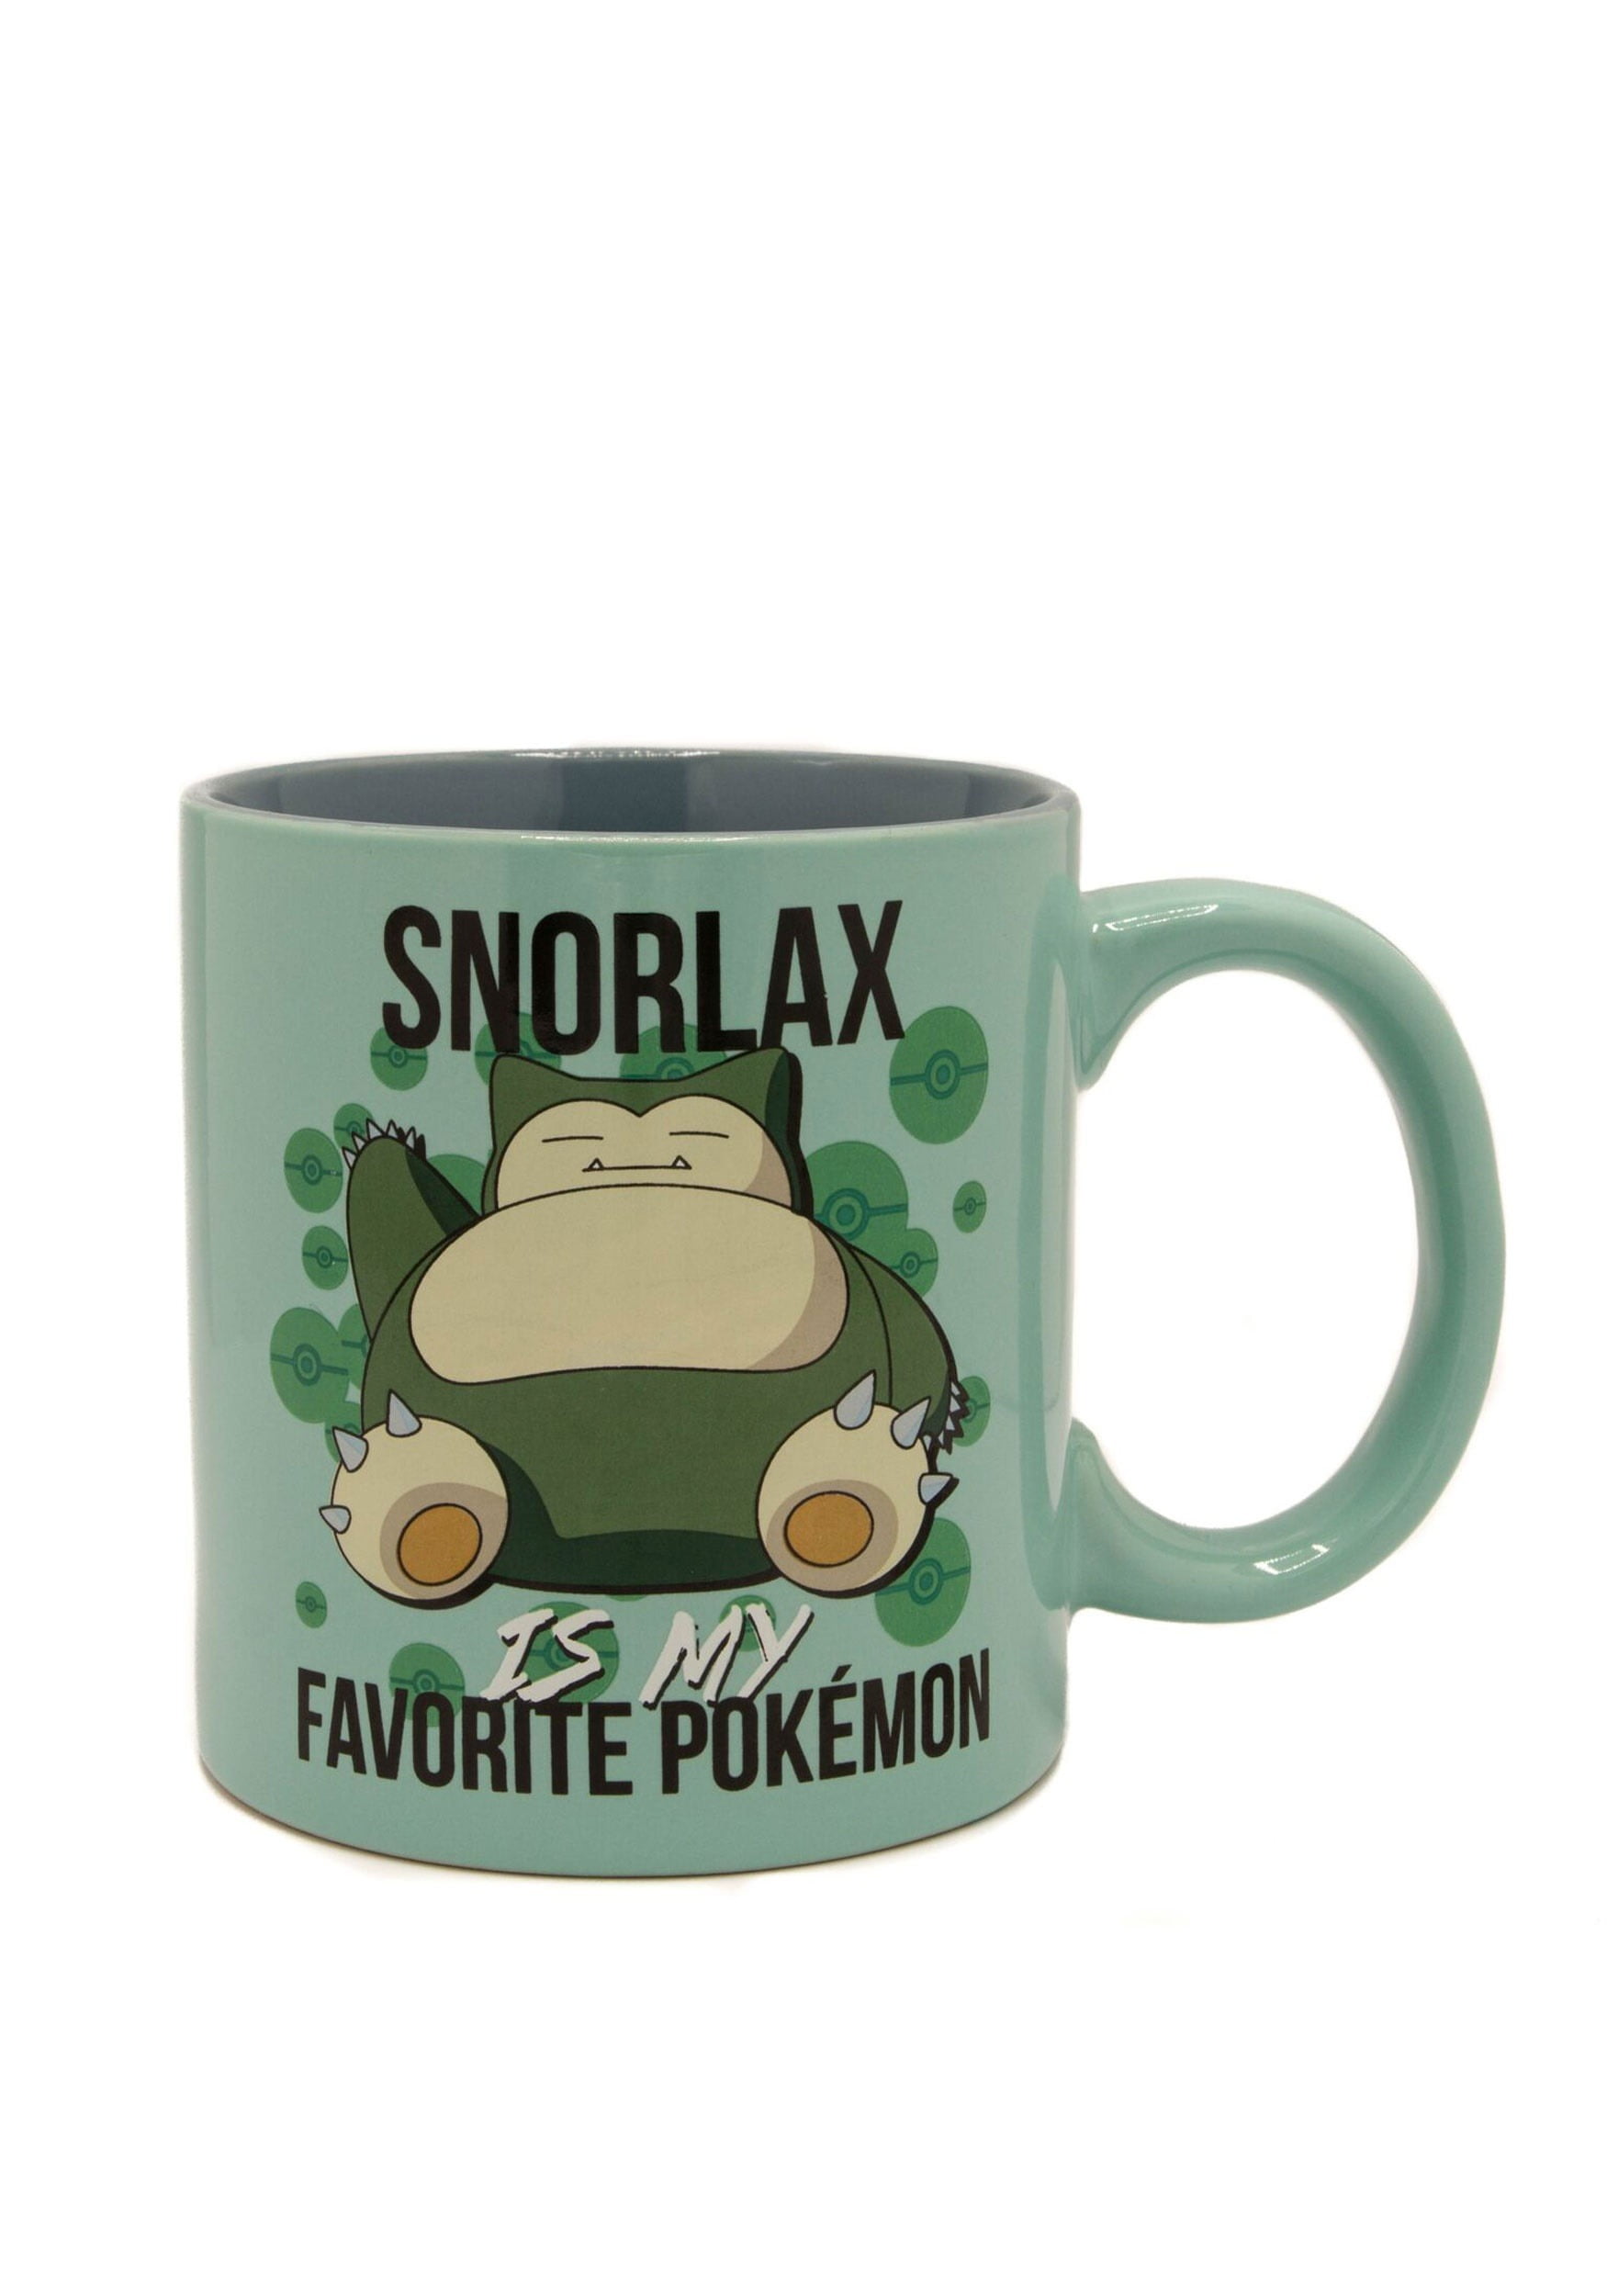 Munchlax Pokémon Holiday 19.6 oz. Mug